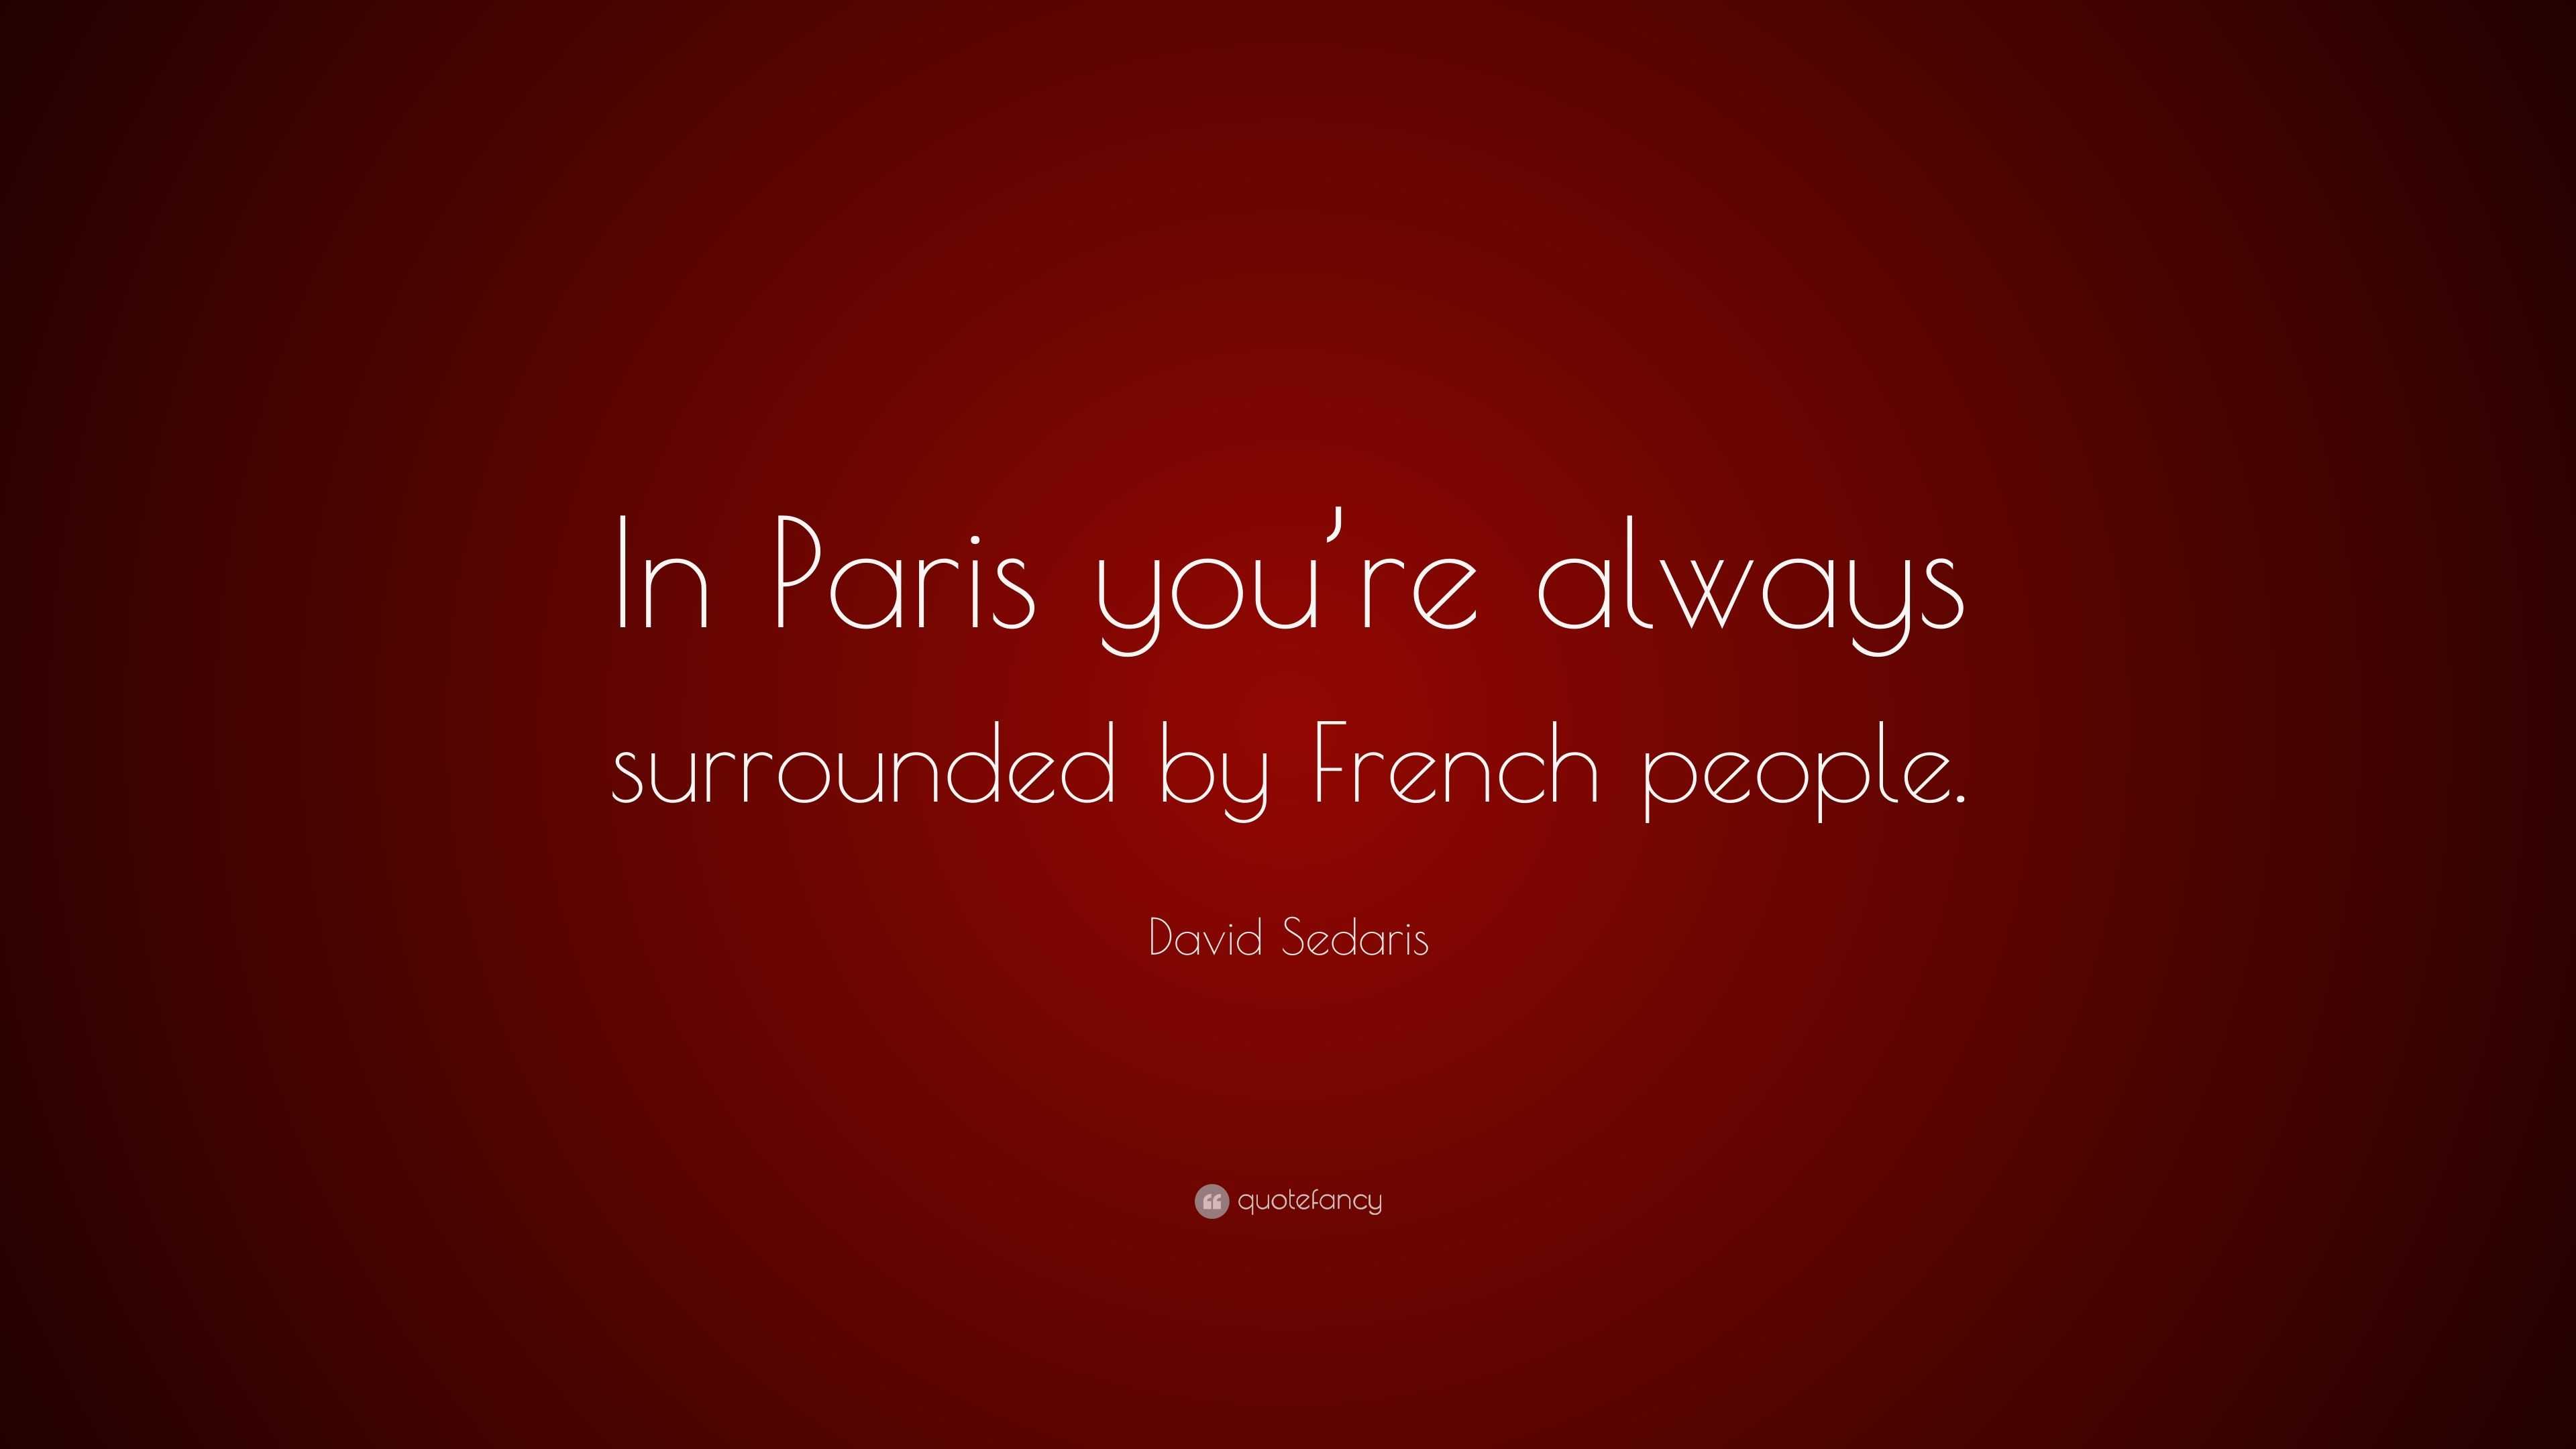 david sedaris essay about learning french